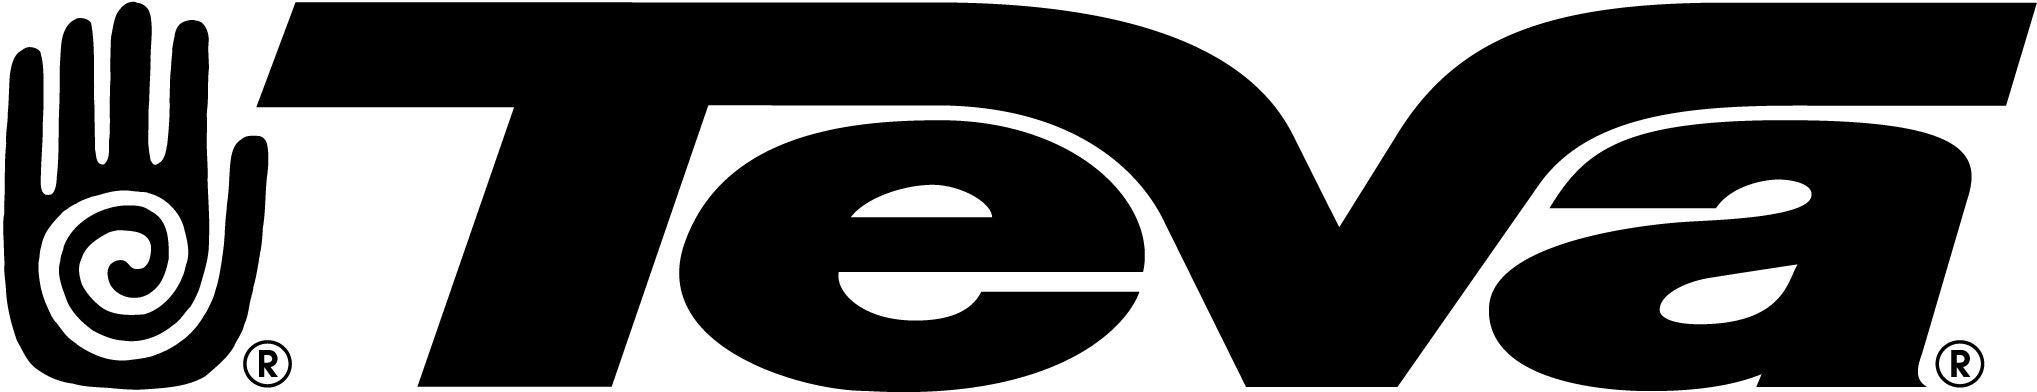 Teva Logo - logo of Teva | Logo Research for Women's Shoe Brands | Logos, Shoes ...